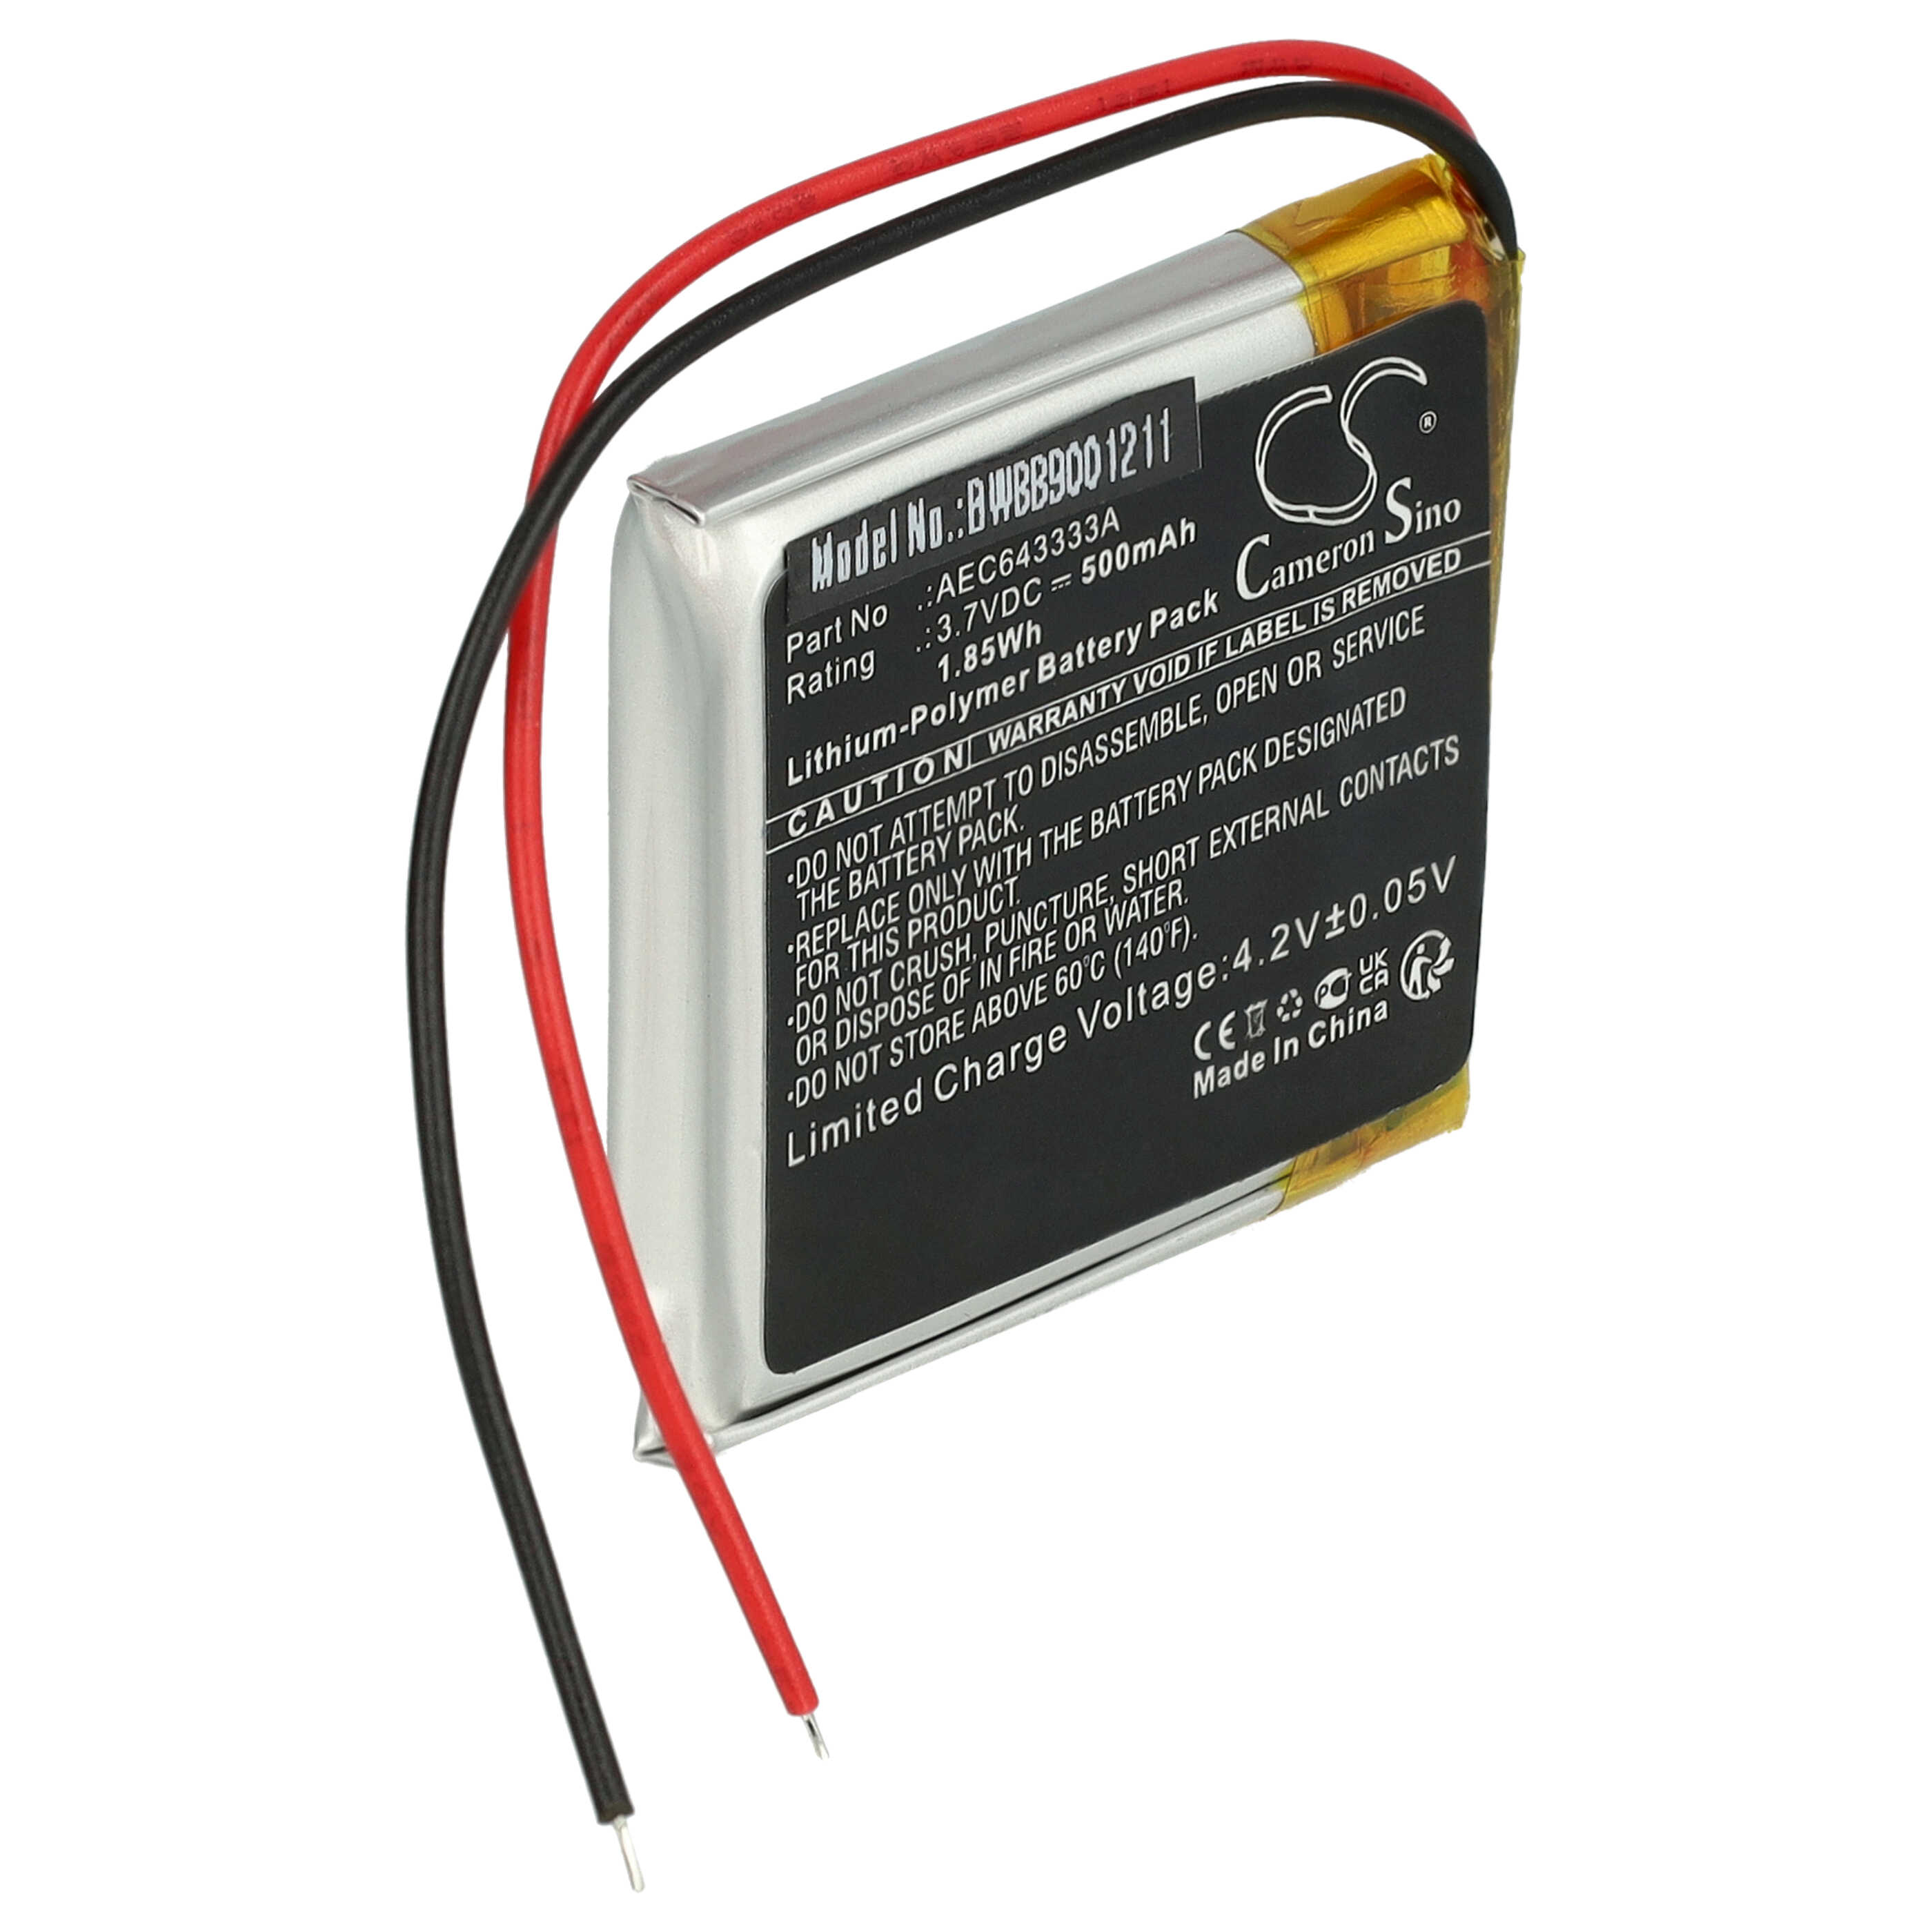 Akumulator do słuchawek bezprzewodowych zamiennik Bang & Olufsen AEC643333A - 500 mAh 3,7 V LiPo